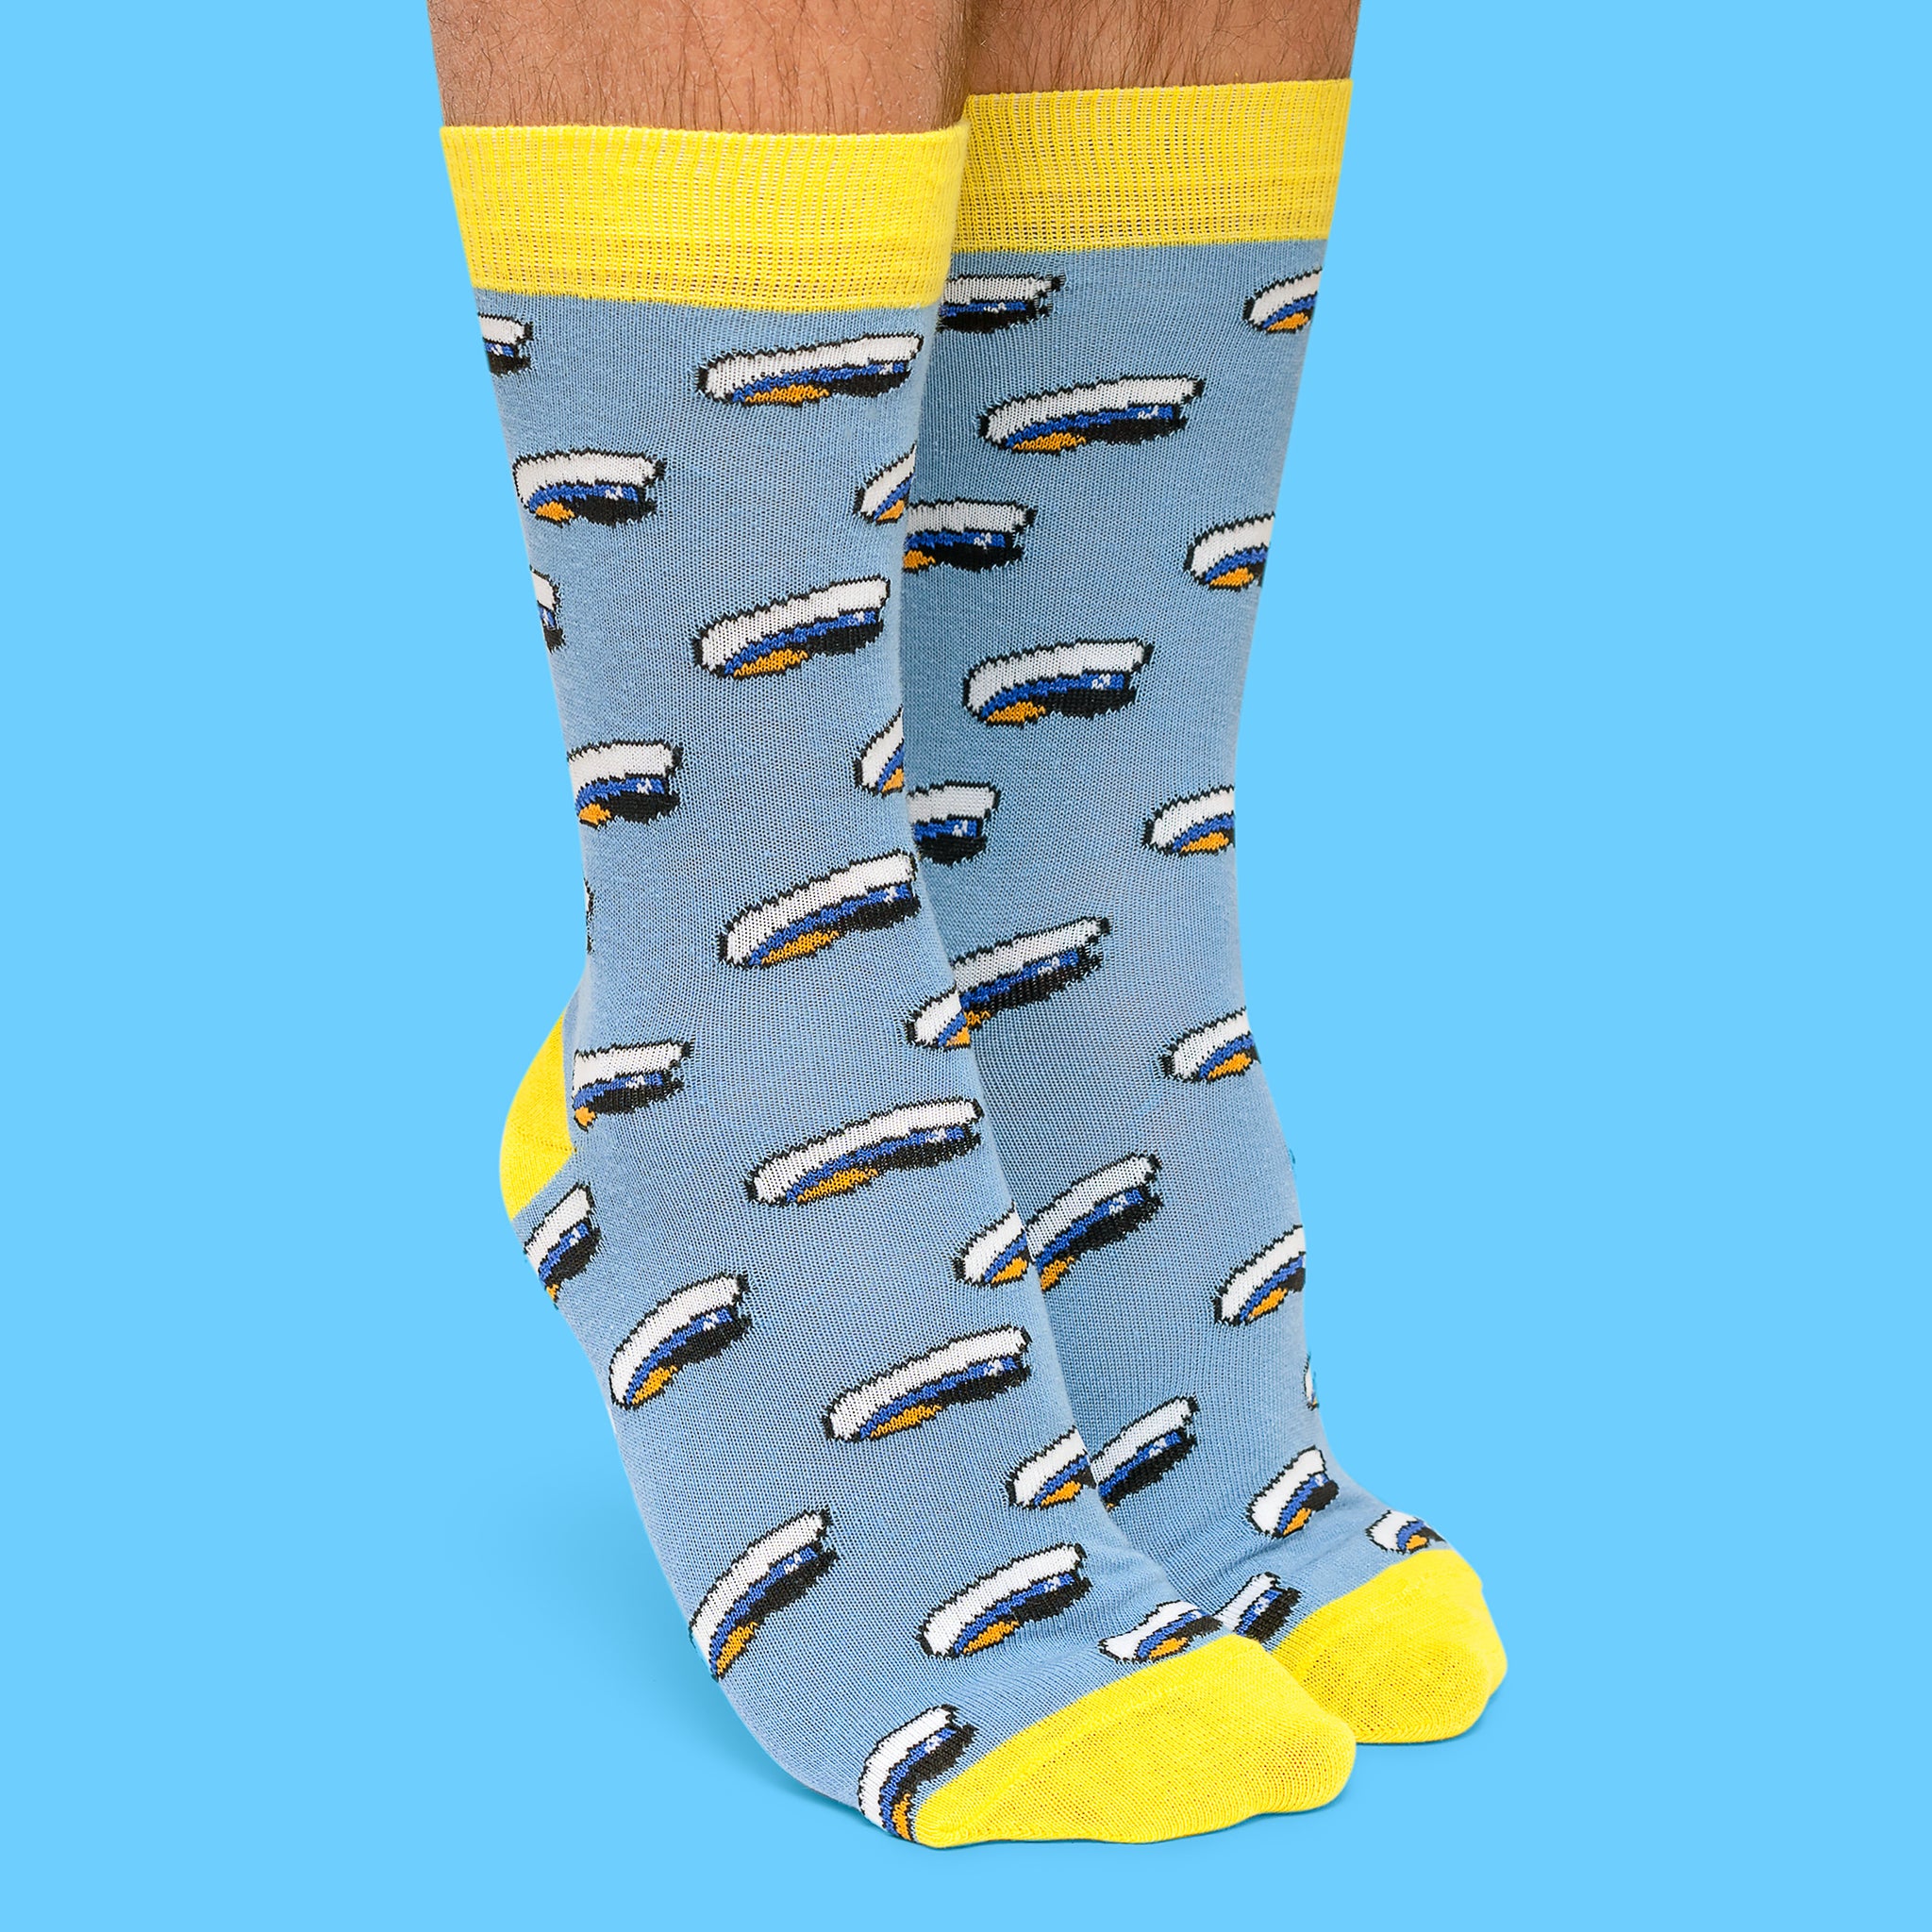 Socks - Student cap